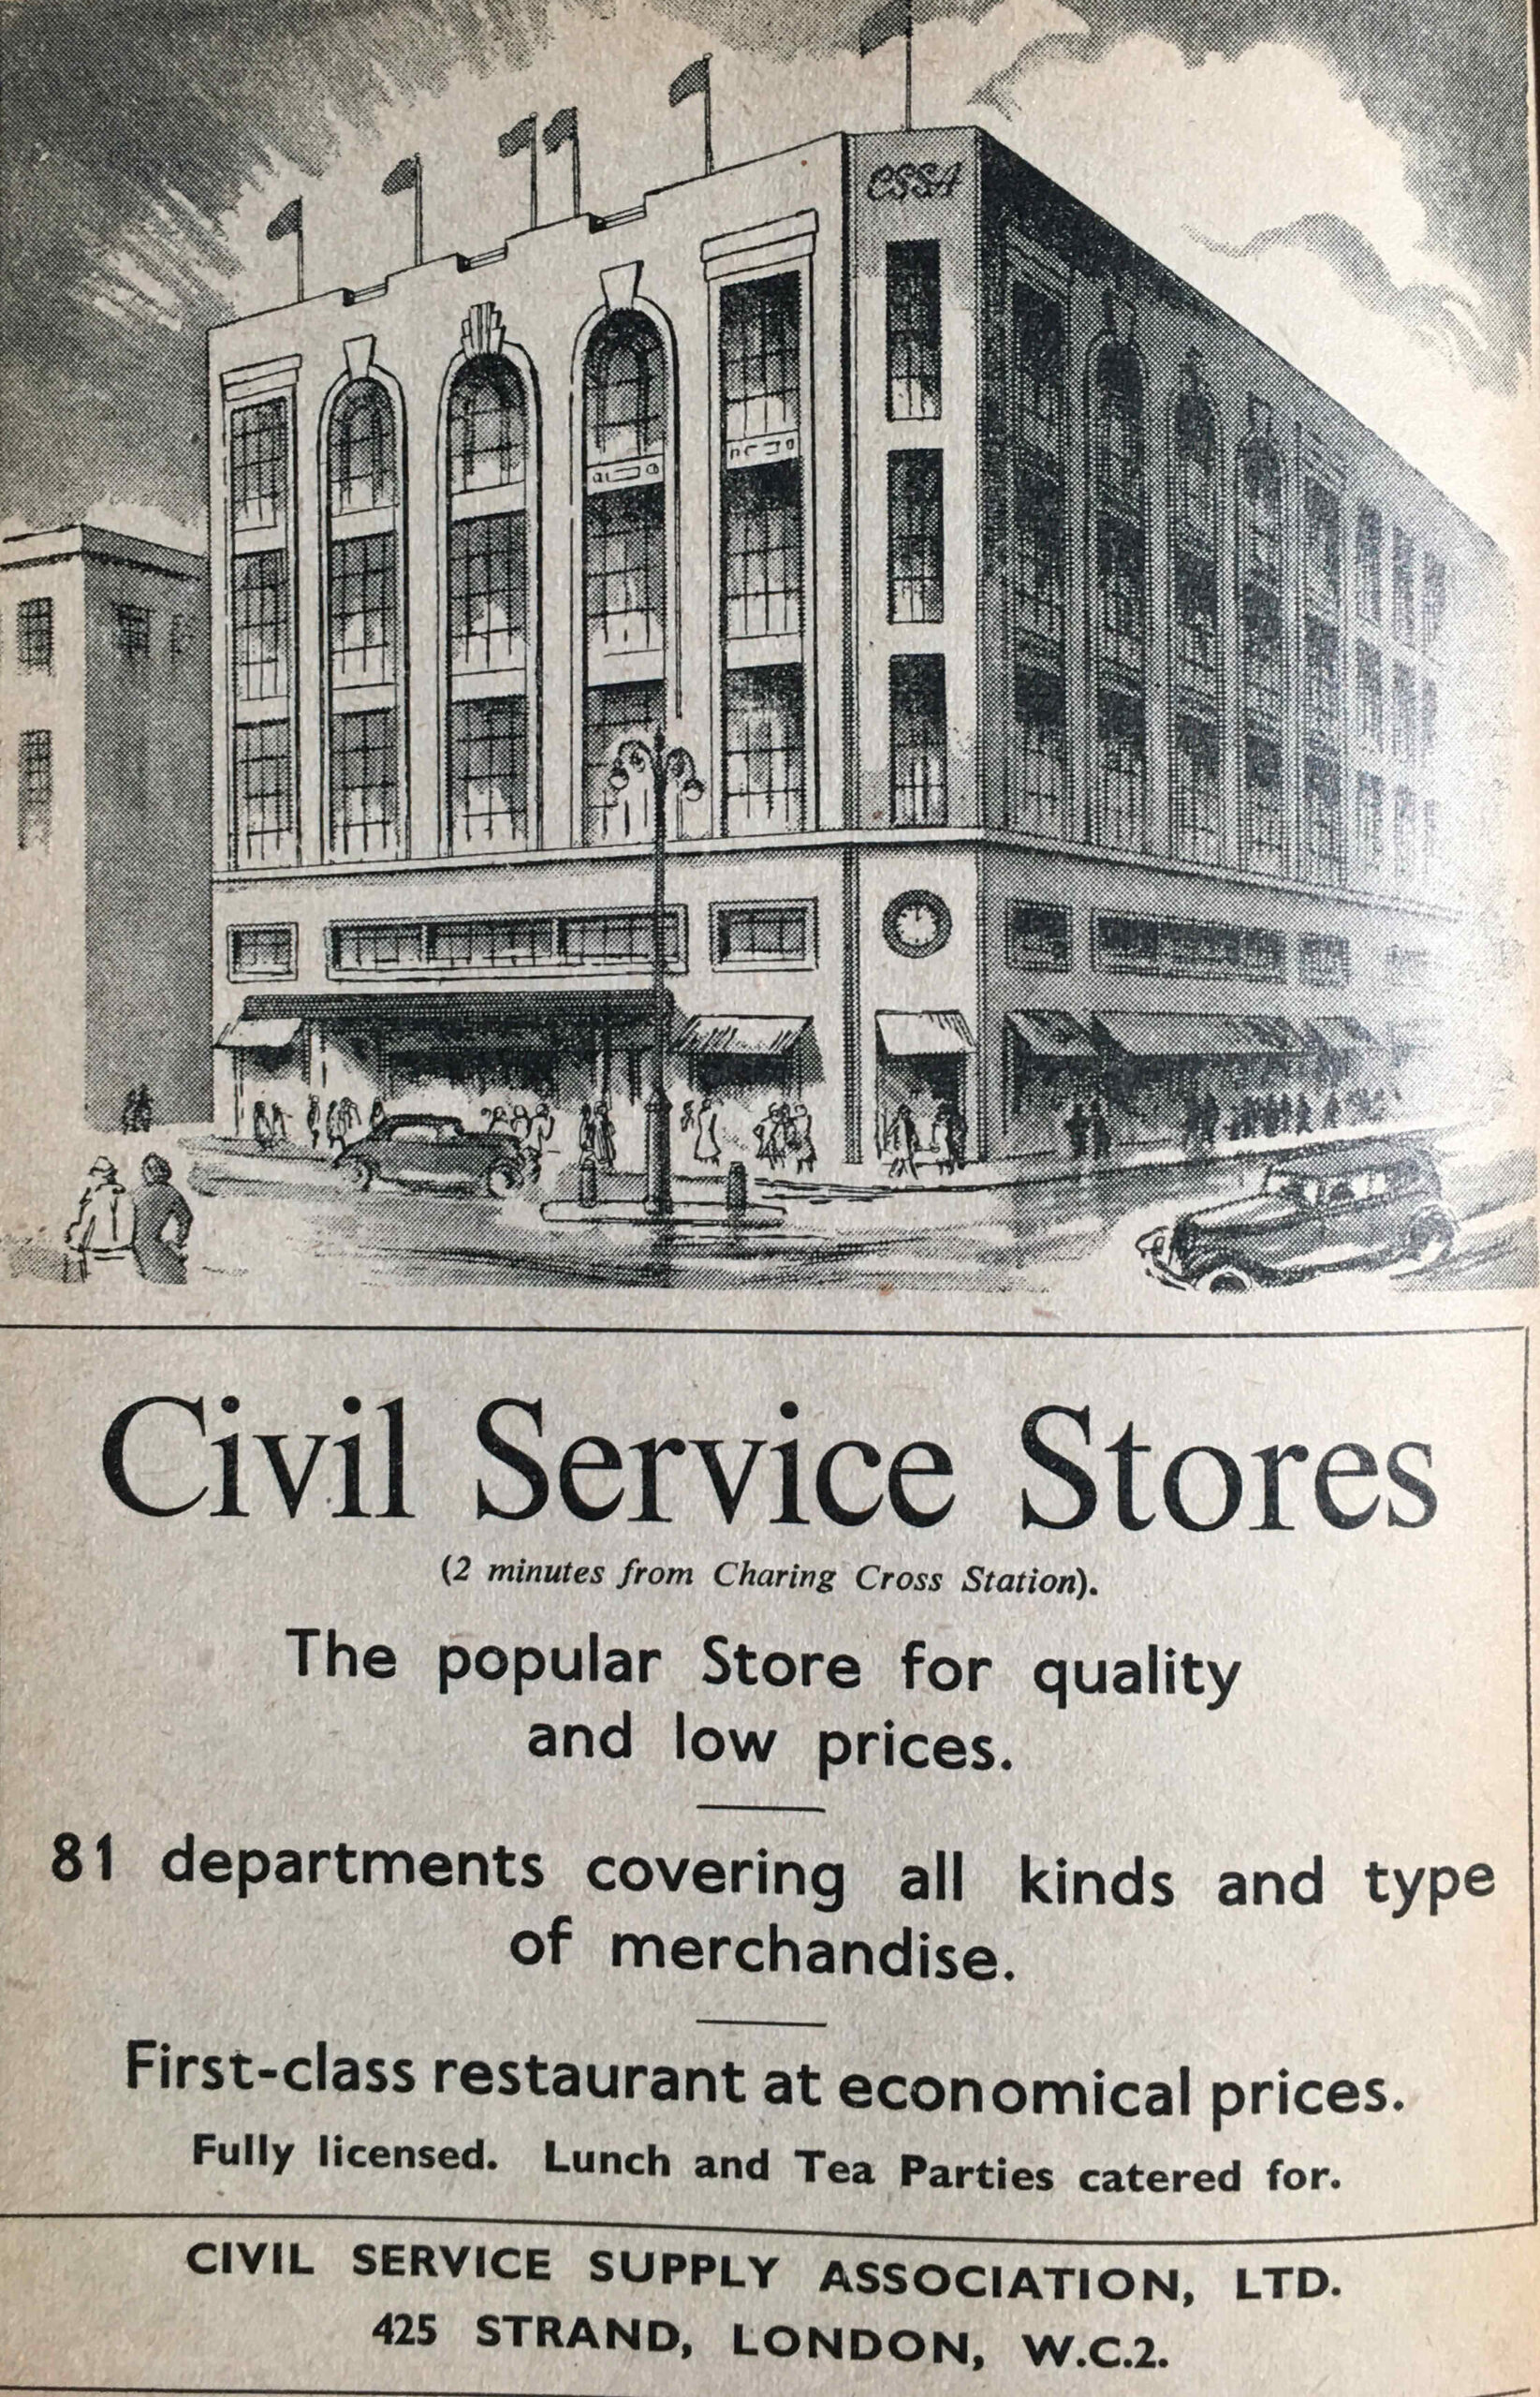 Civil Service Stores